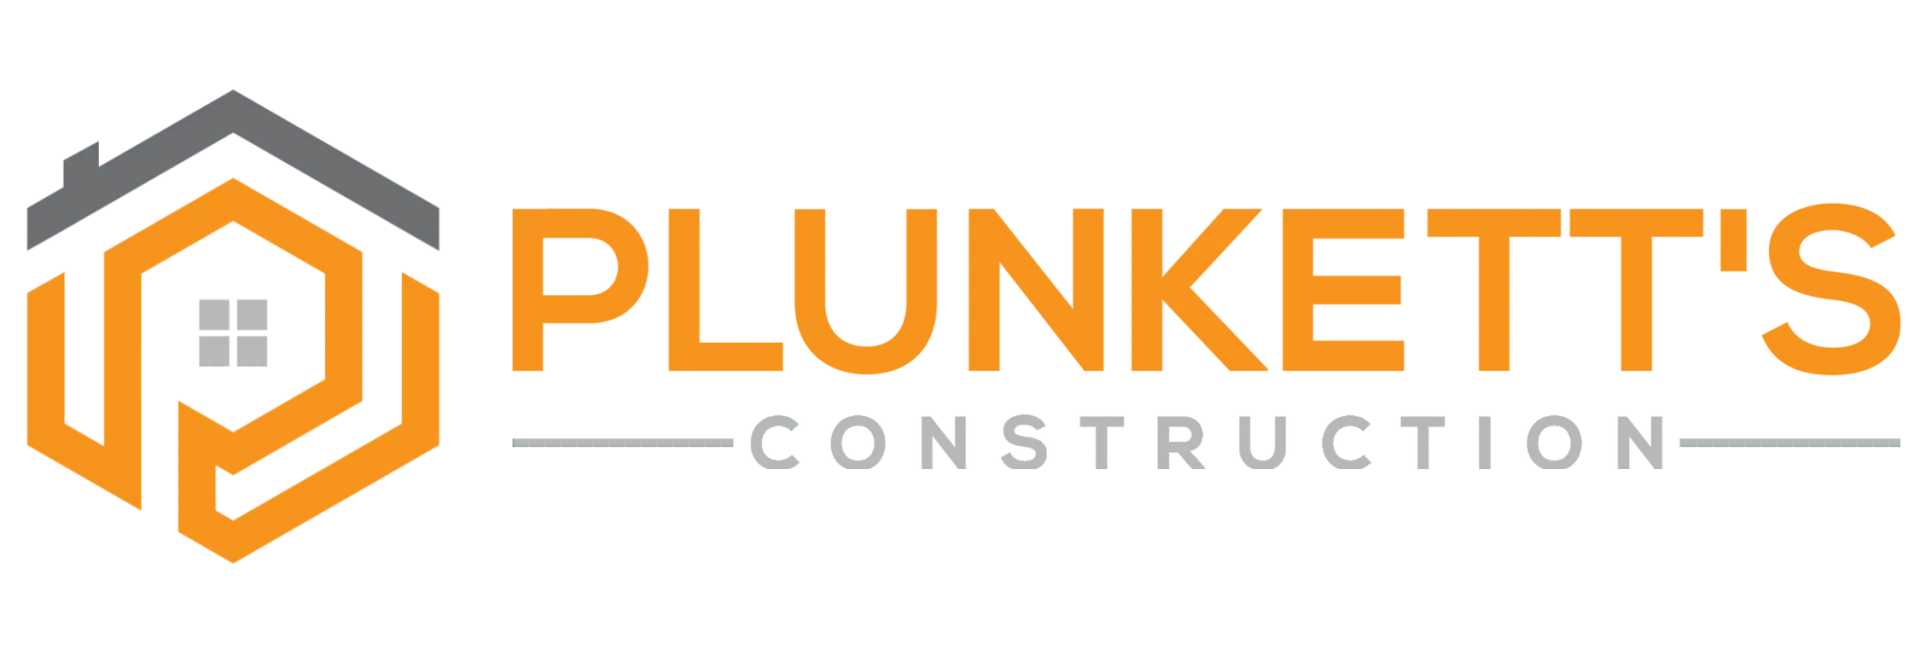 Plunkett's Construction Logo